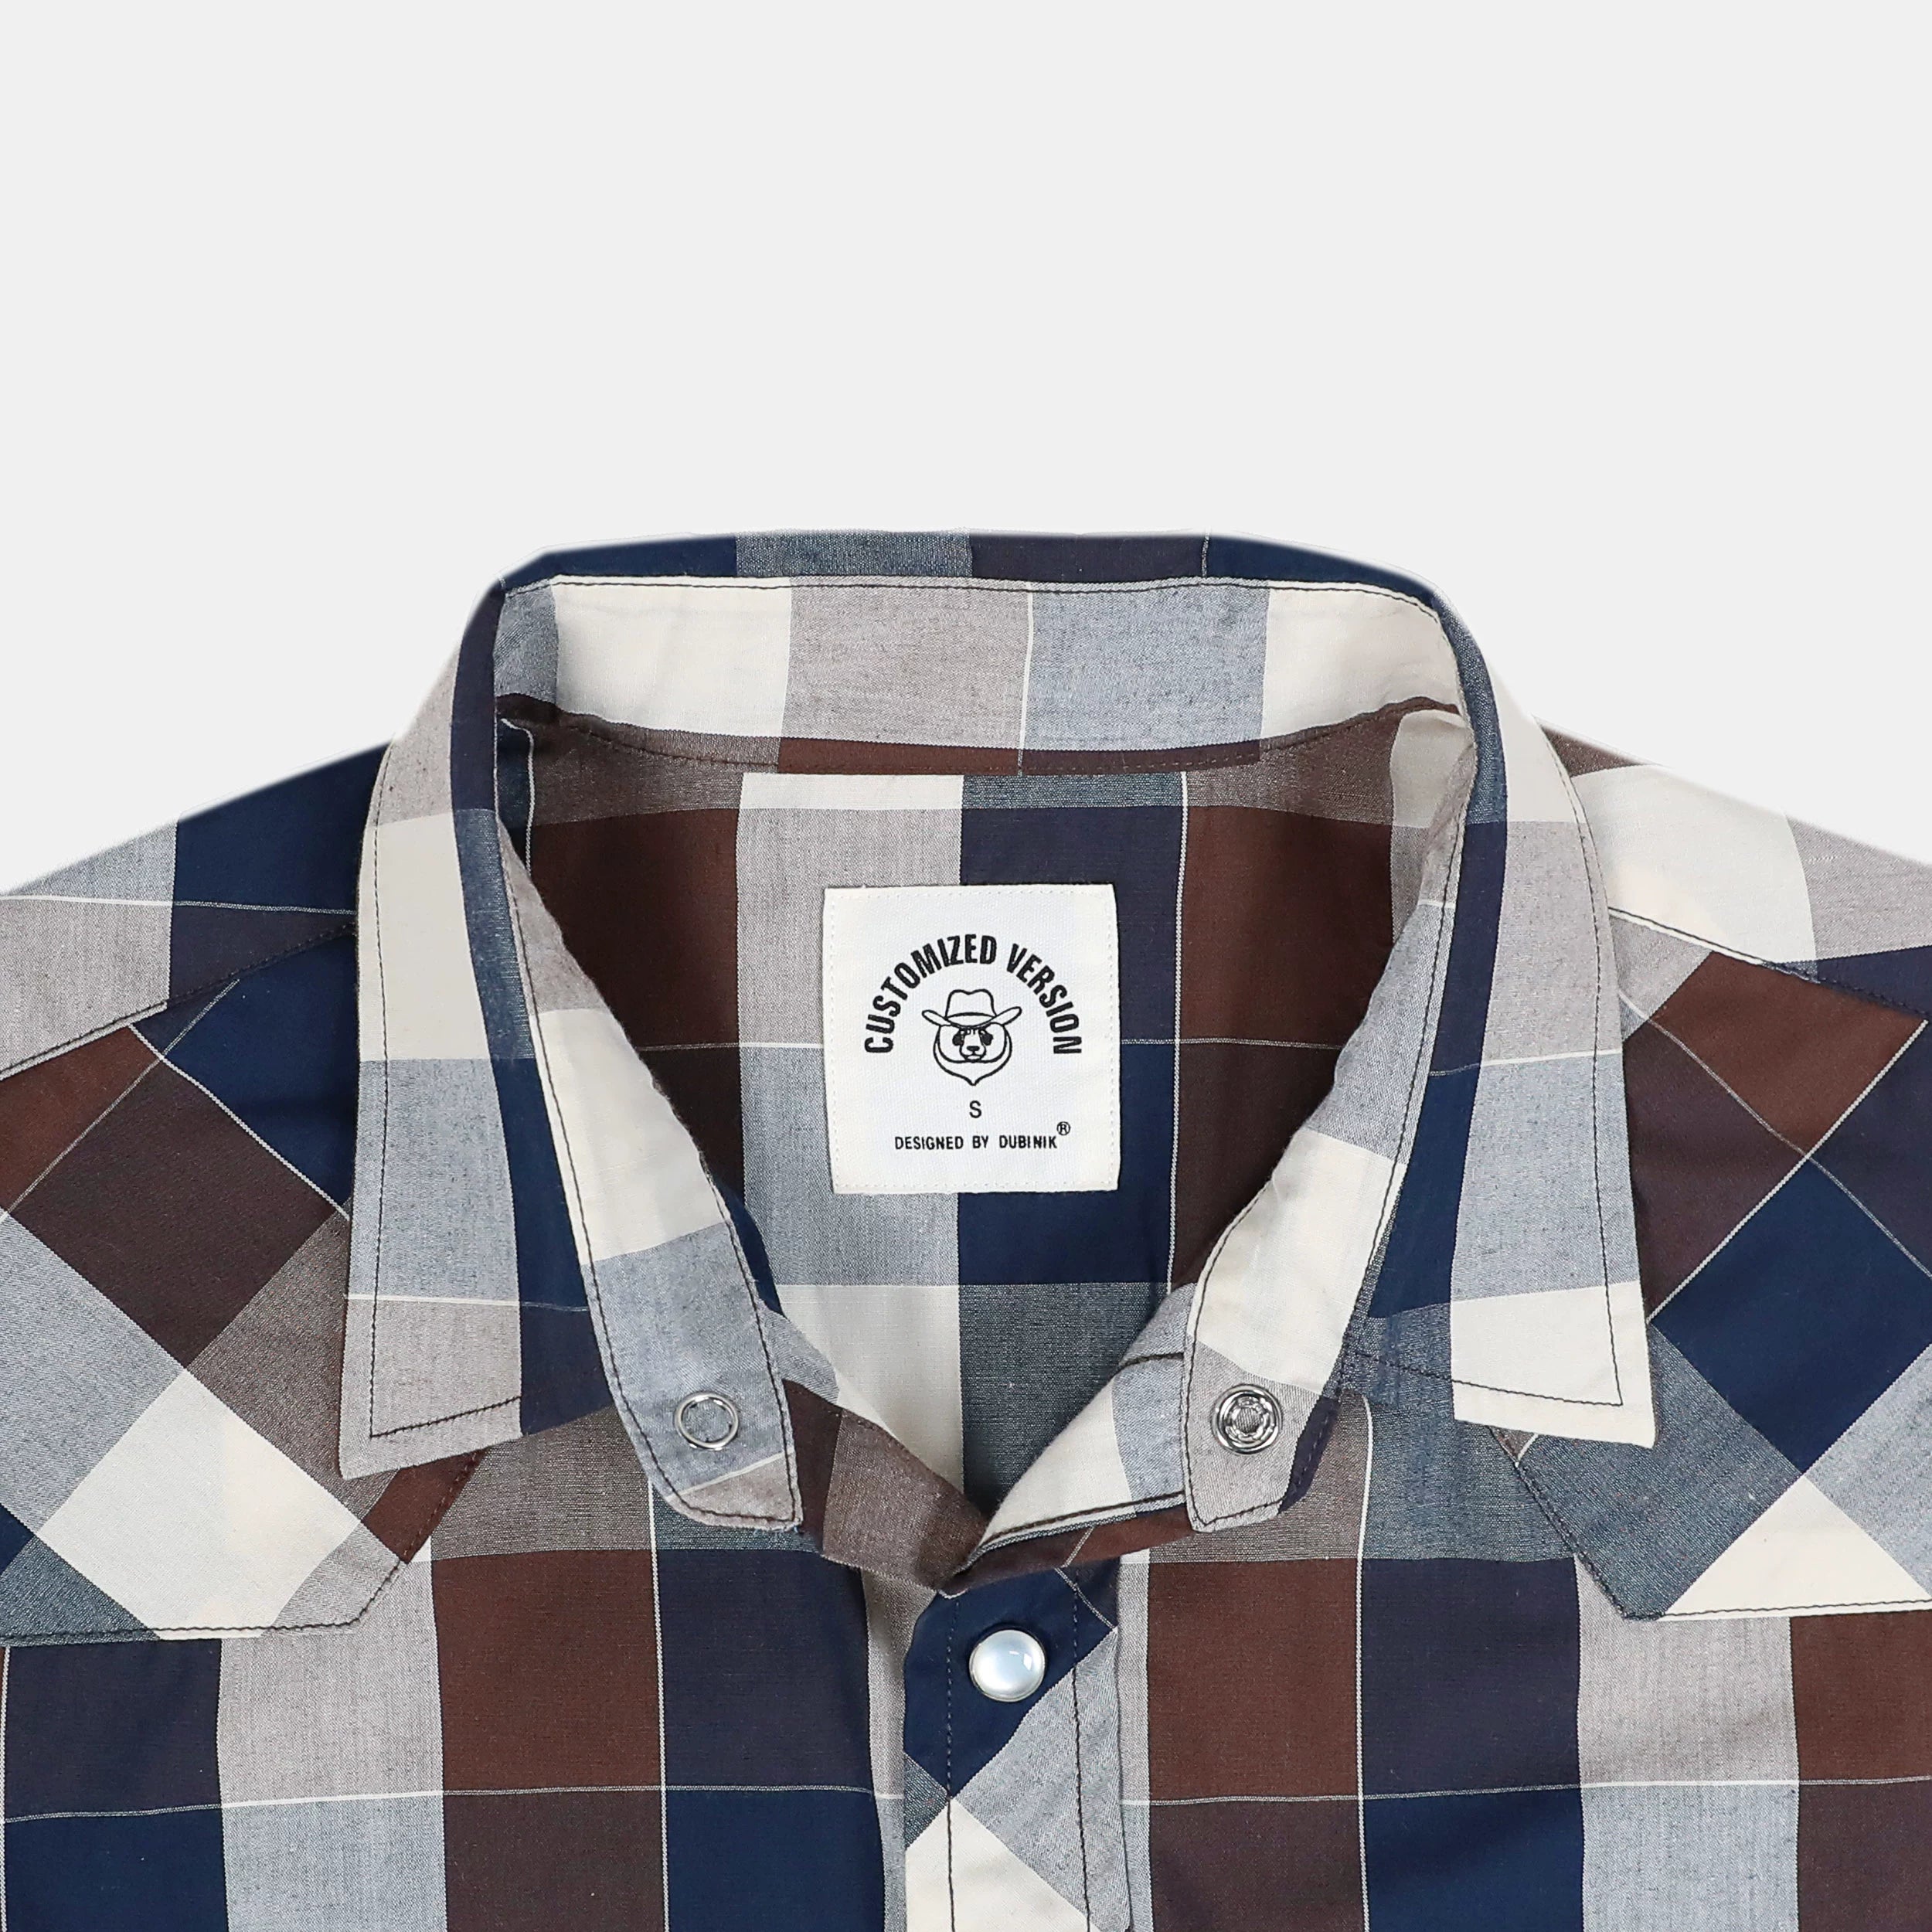 Dubinik® Western Shirts for Men Short Sleeve Plaid Pearl Snap Shirts for Men Button Up Shirt Cowboy Casual Work Shirt#41010